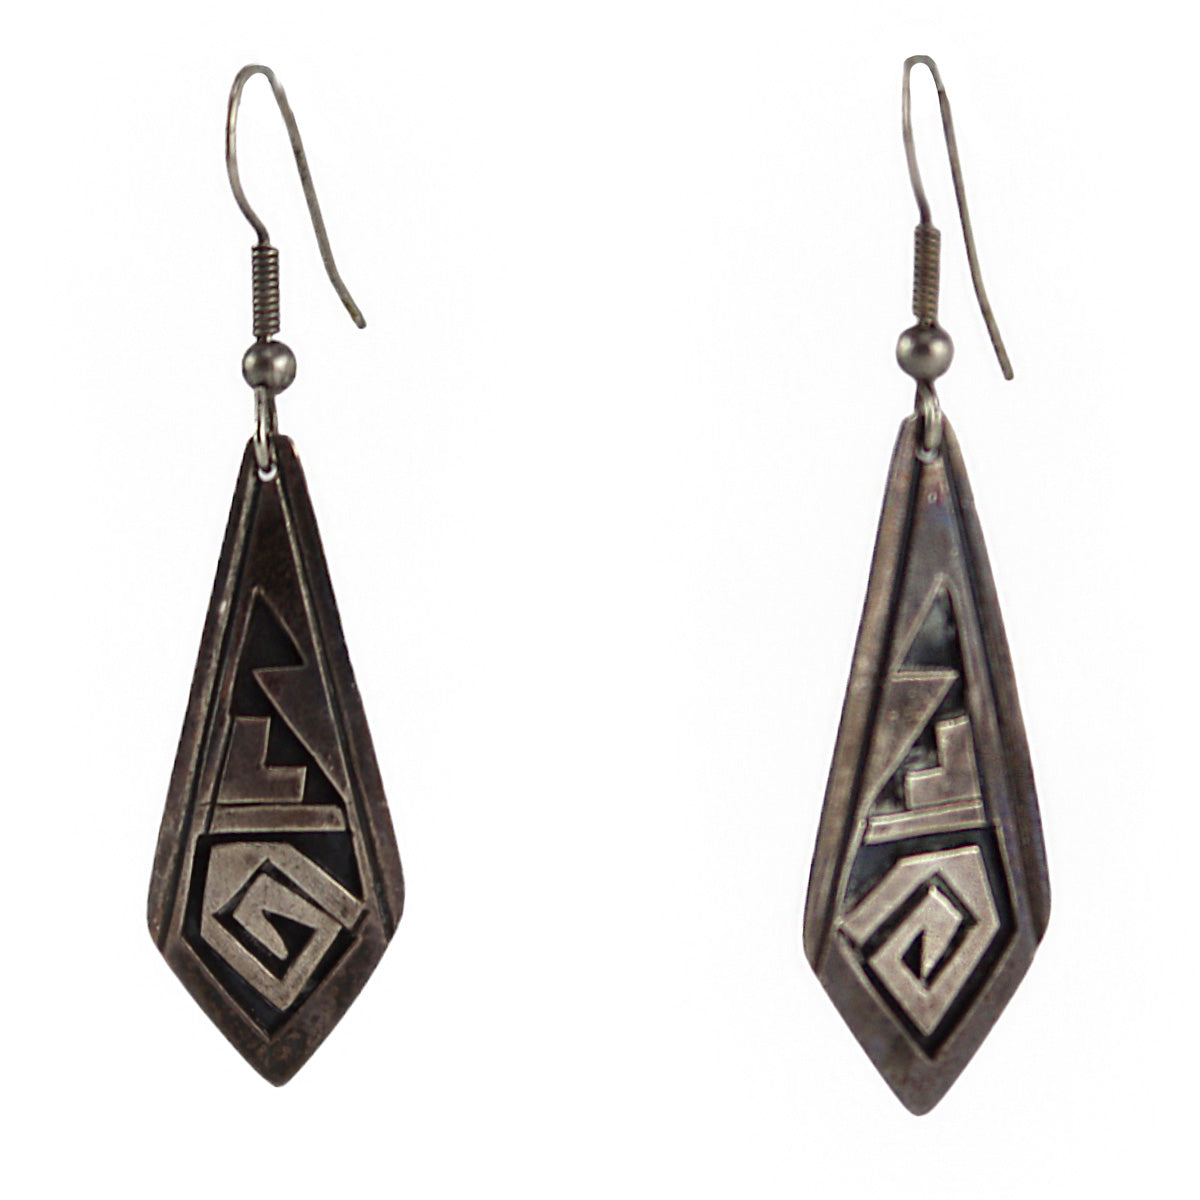 Peter Nelson (b. 1954) - Navajo Silver Overlay Earrings c. 1970s, 2.25" x 0.625"